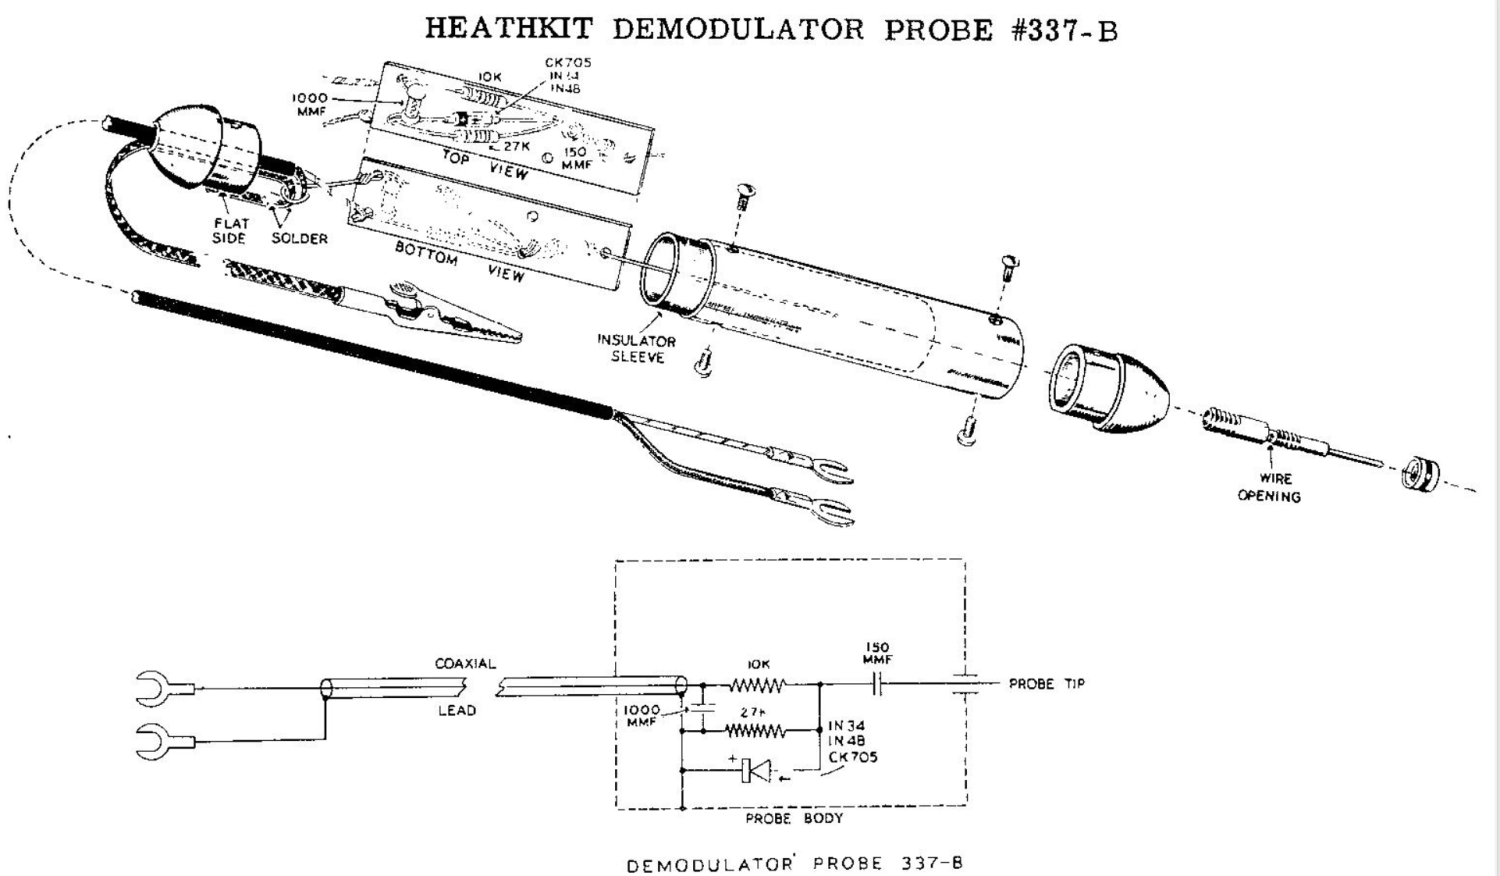 Heathkit 337-B Demodulation Probe - Drawing